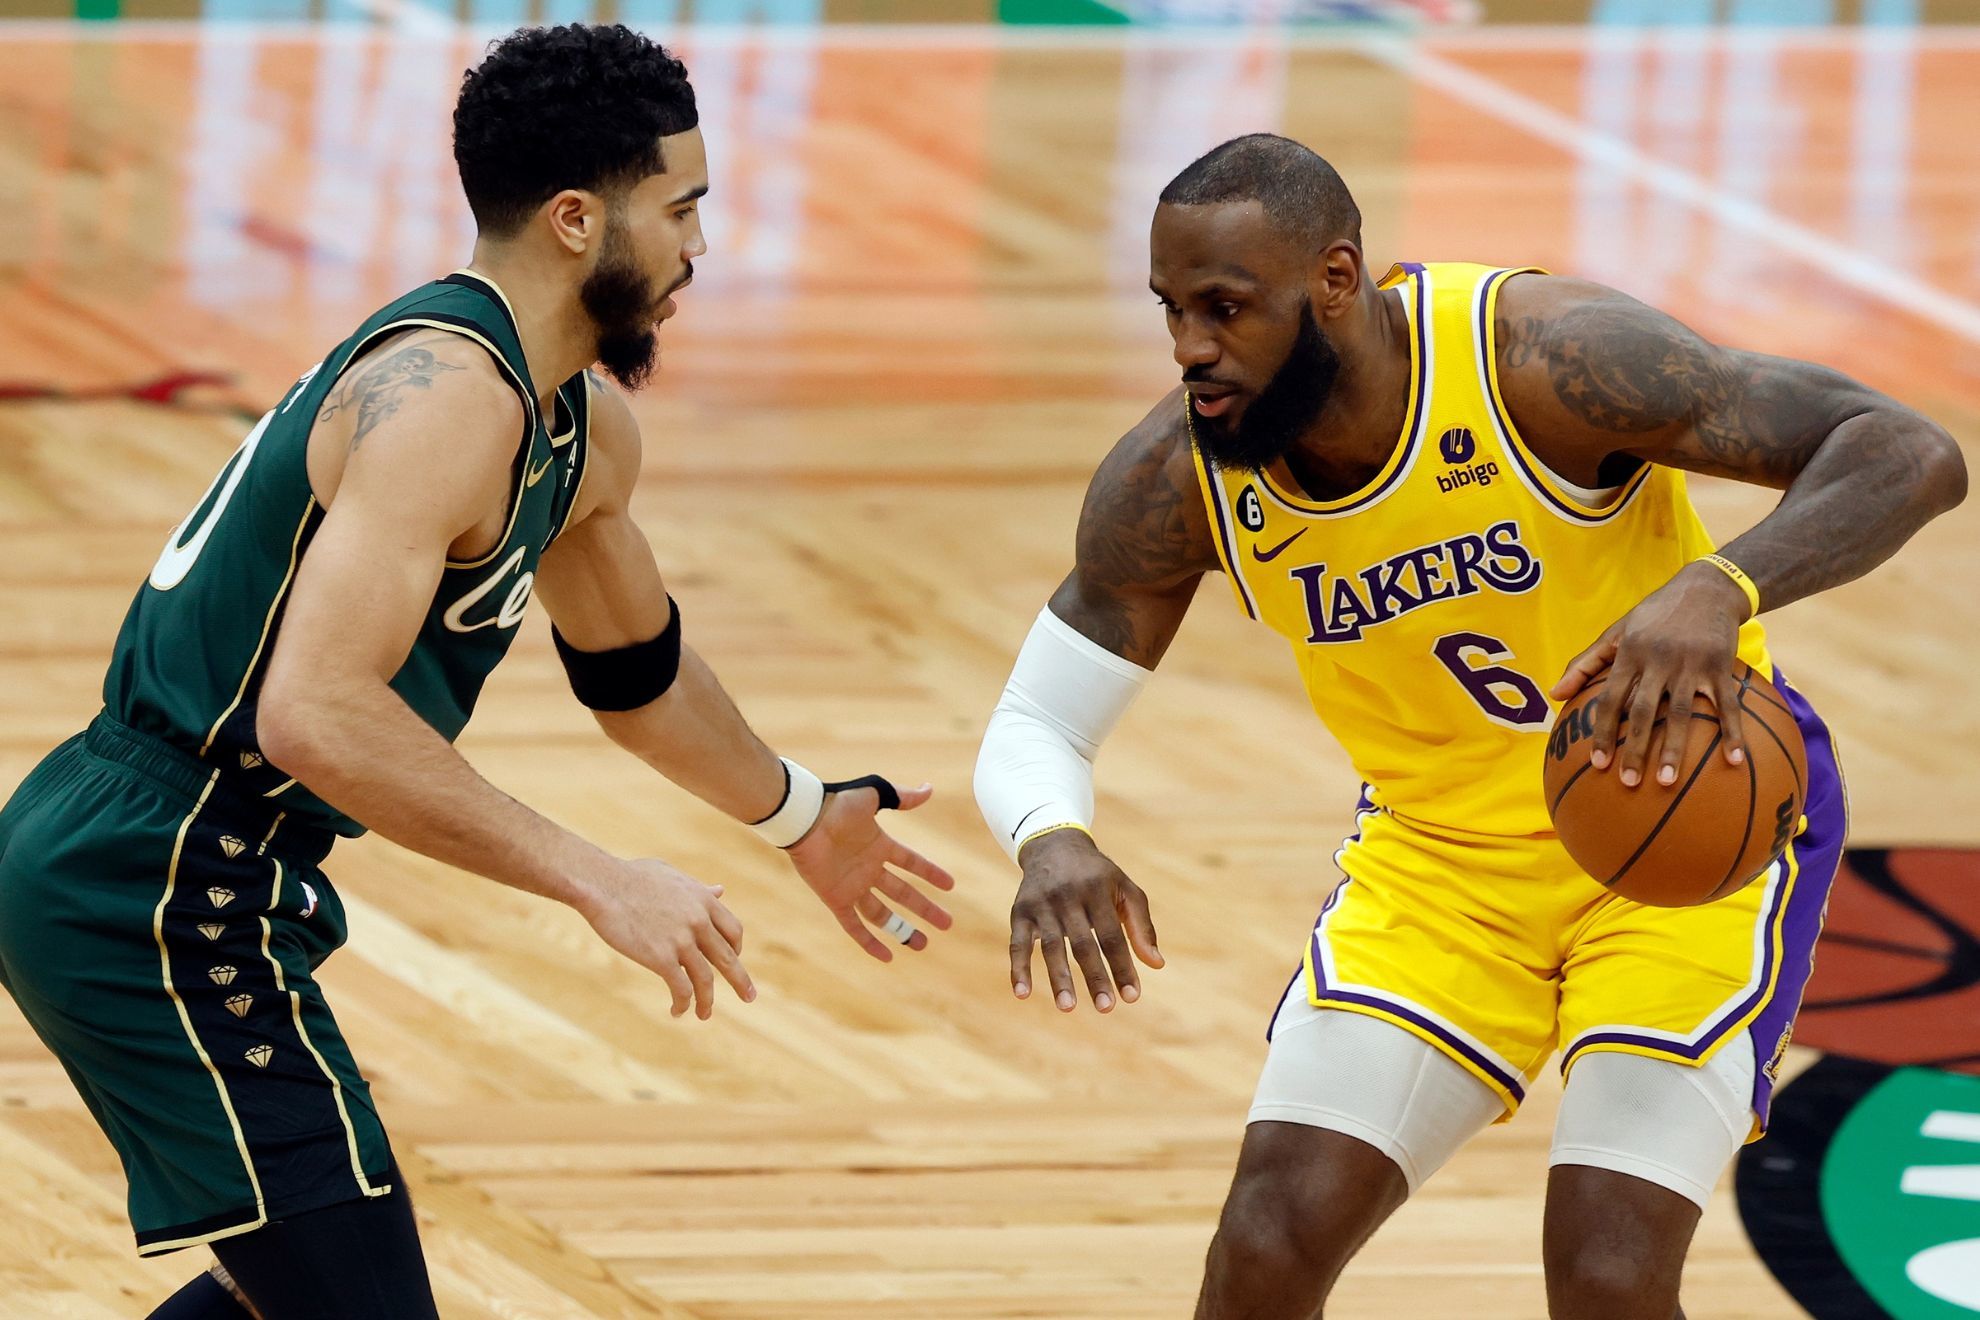 Lakers visit Celtics at TD Garden